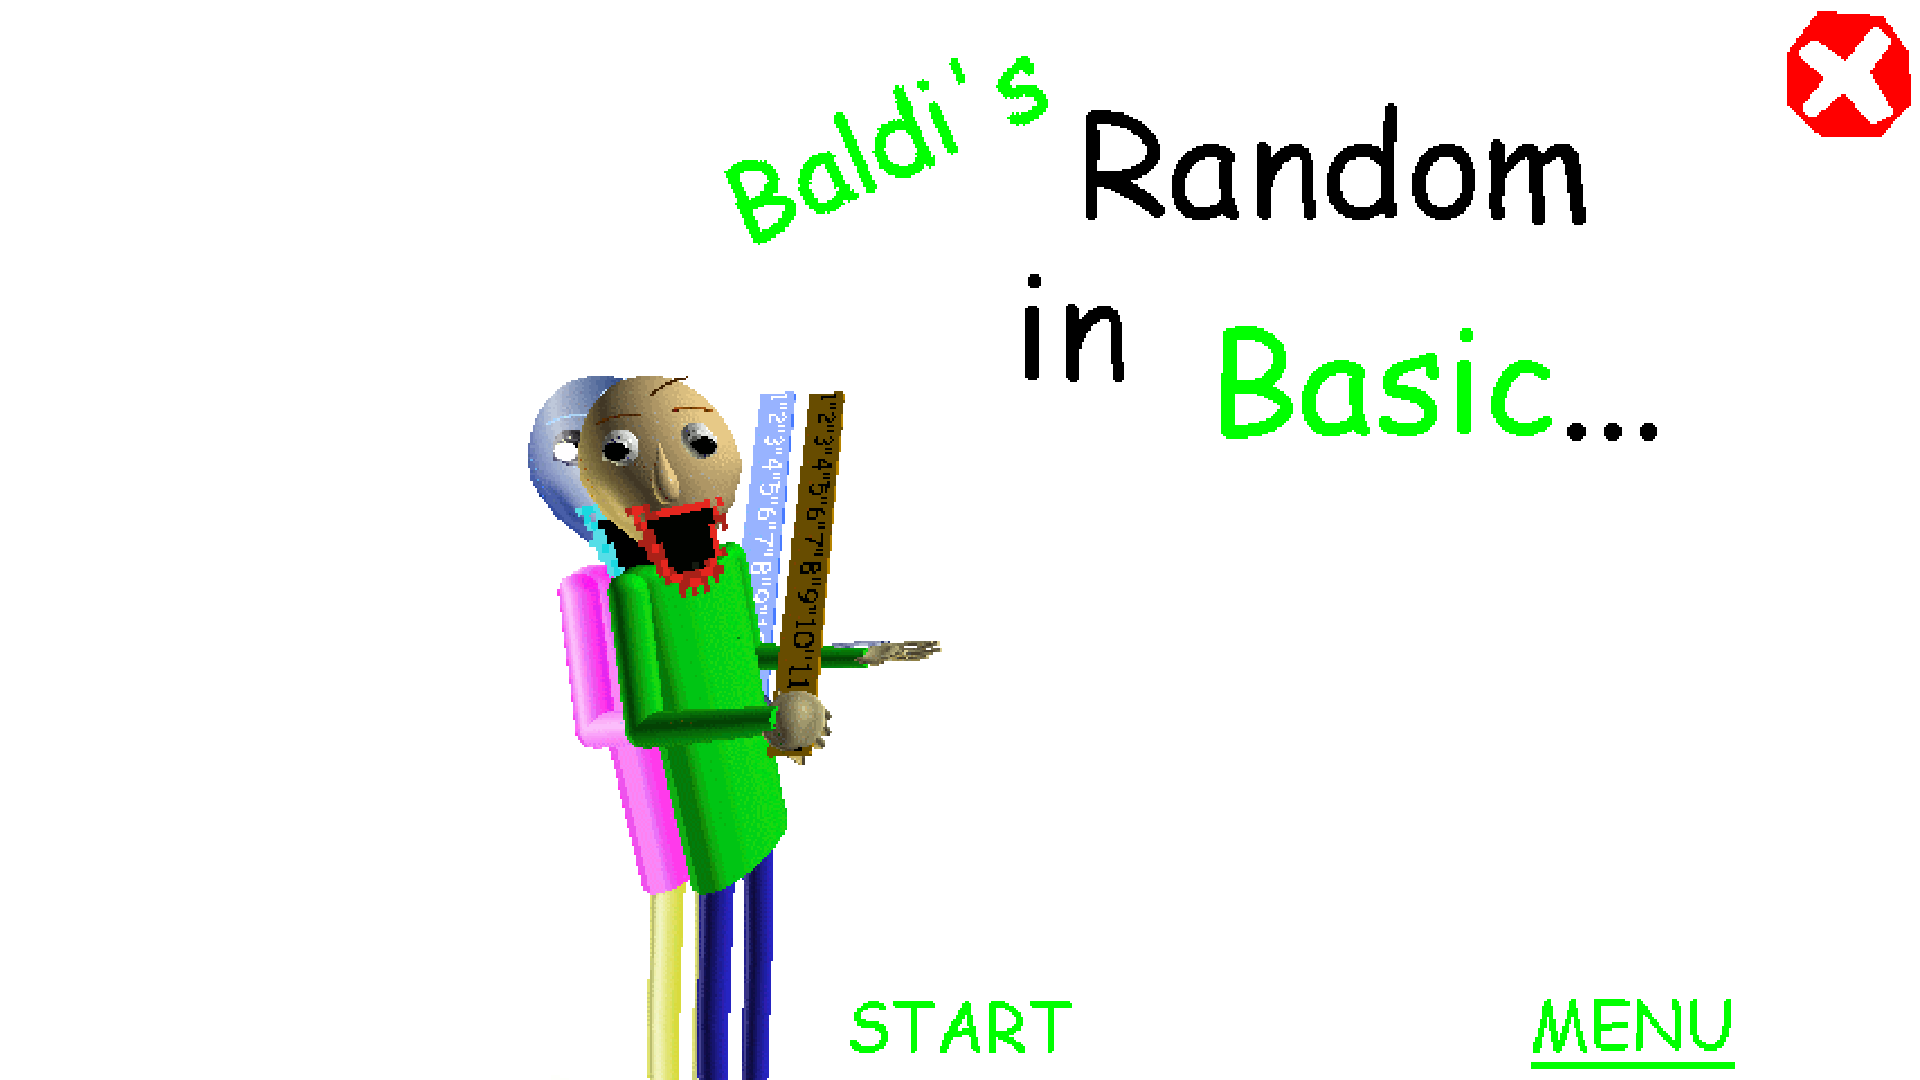 Baldi's Random in Basic...